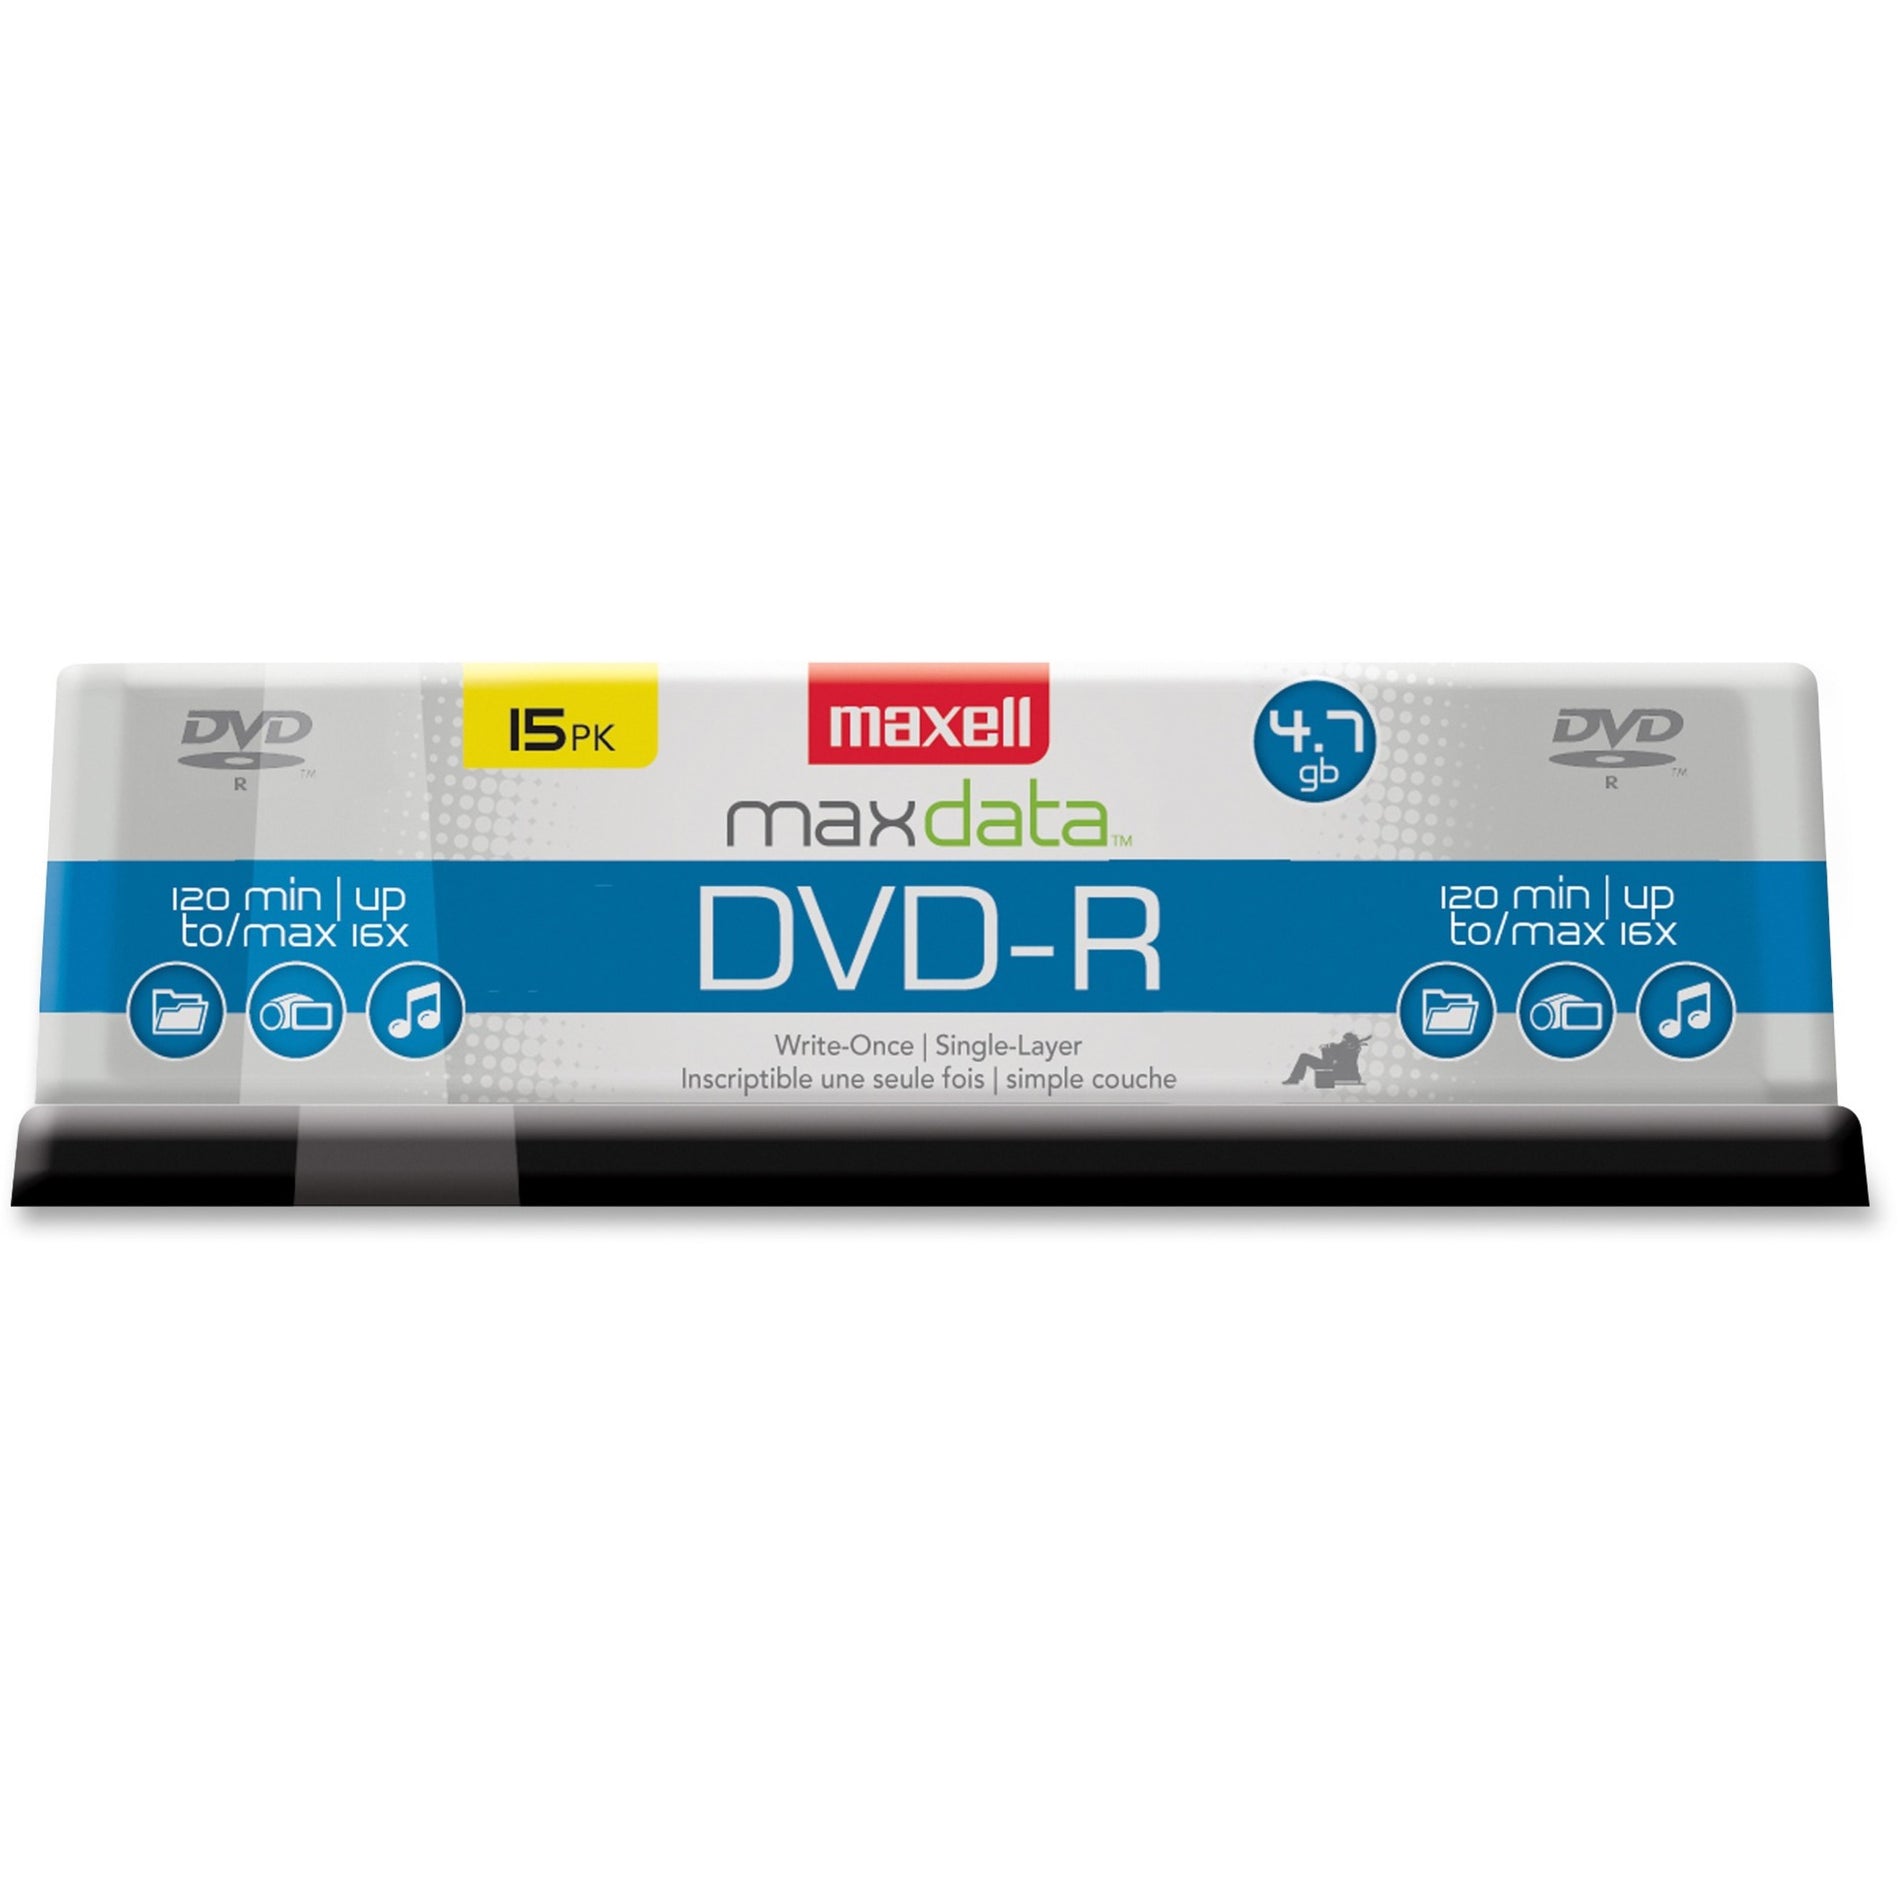 Maxell 16x DVD-R Media - 4.7GB Storage, 16x Write Speed [Discontinued]